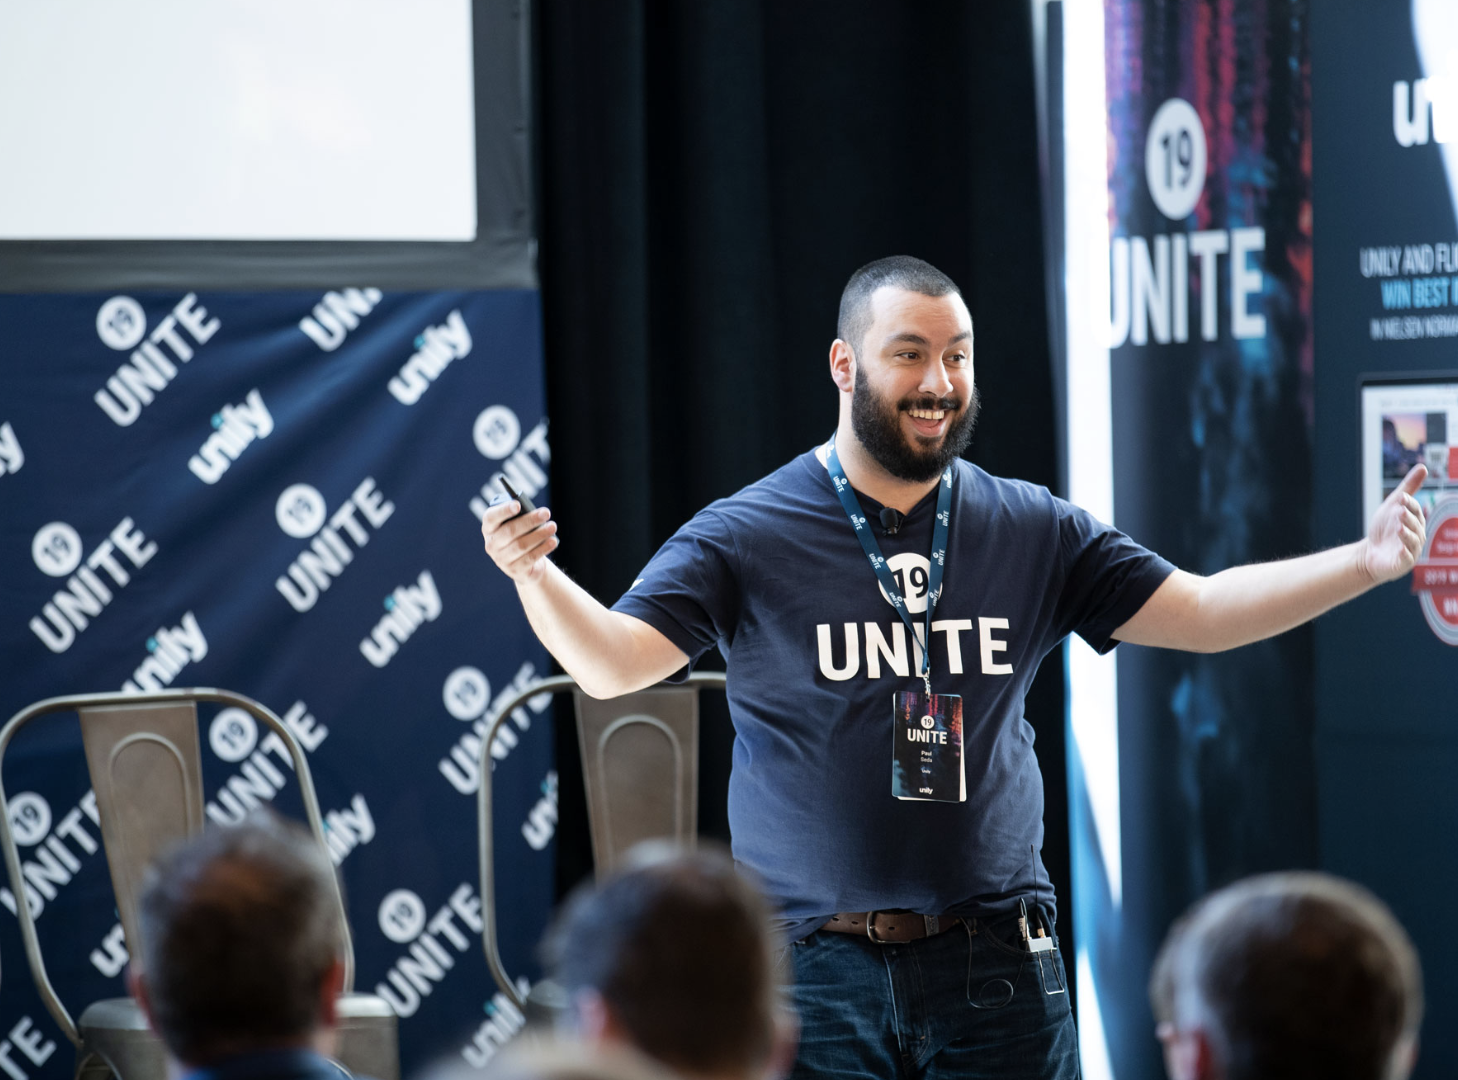 Unite-2019-digital-workplace-conference